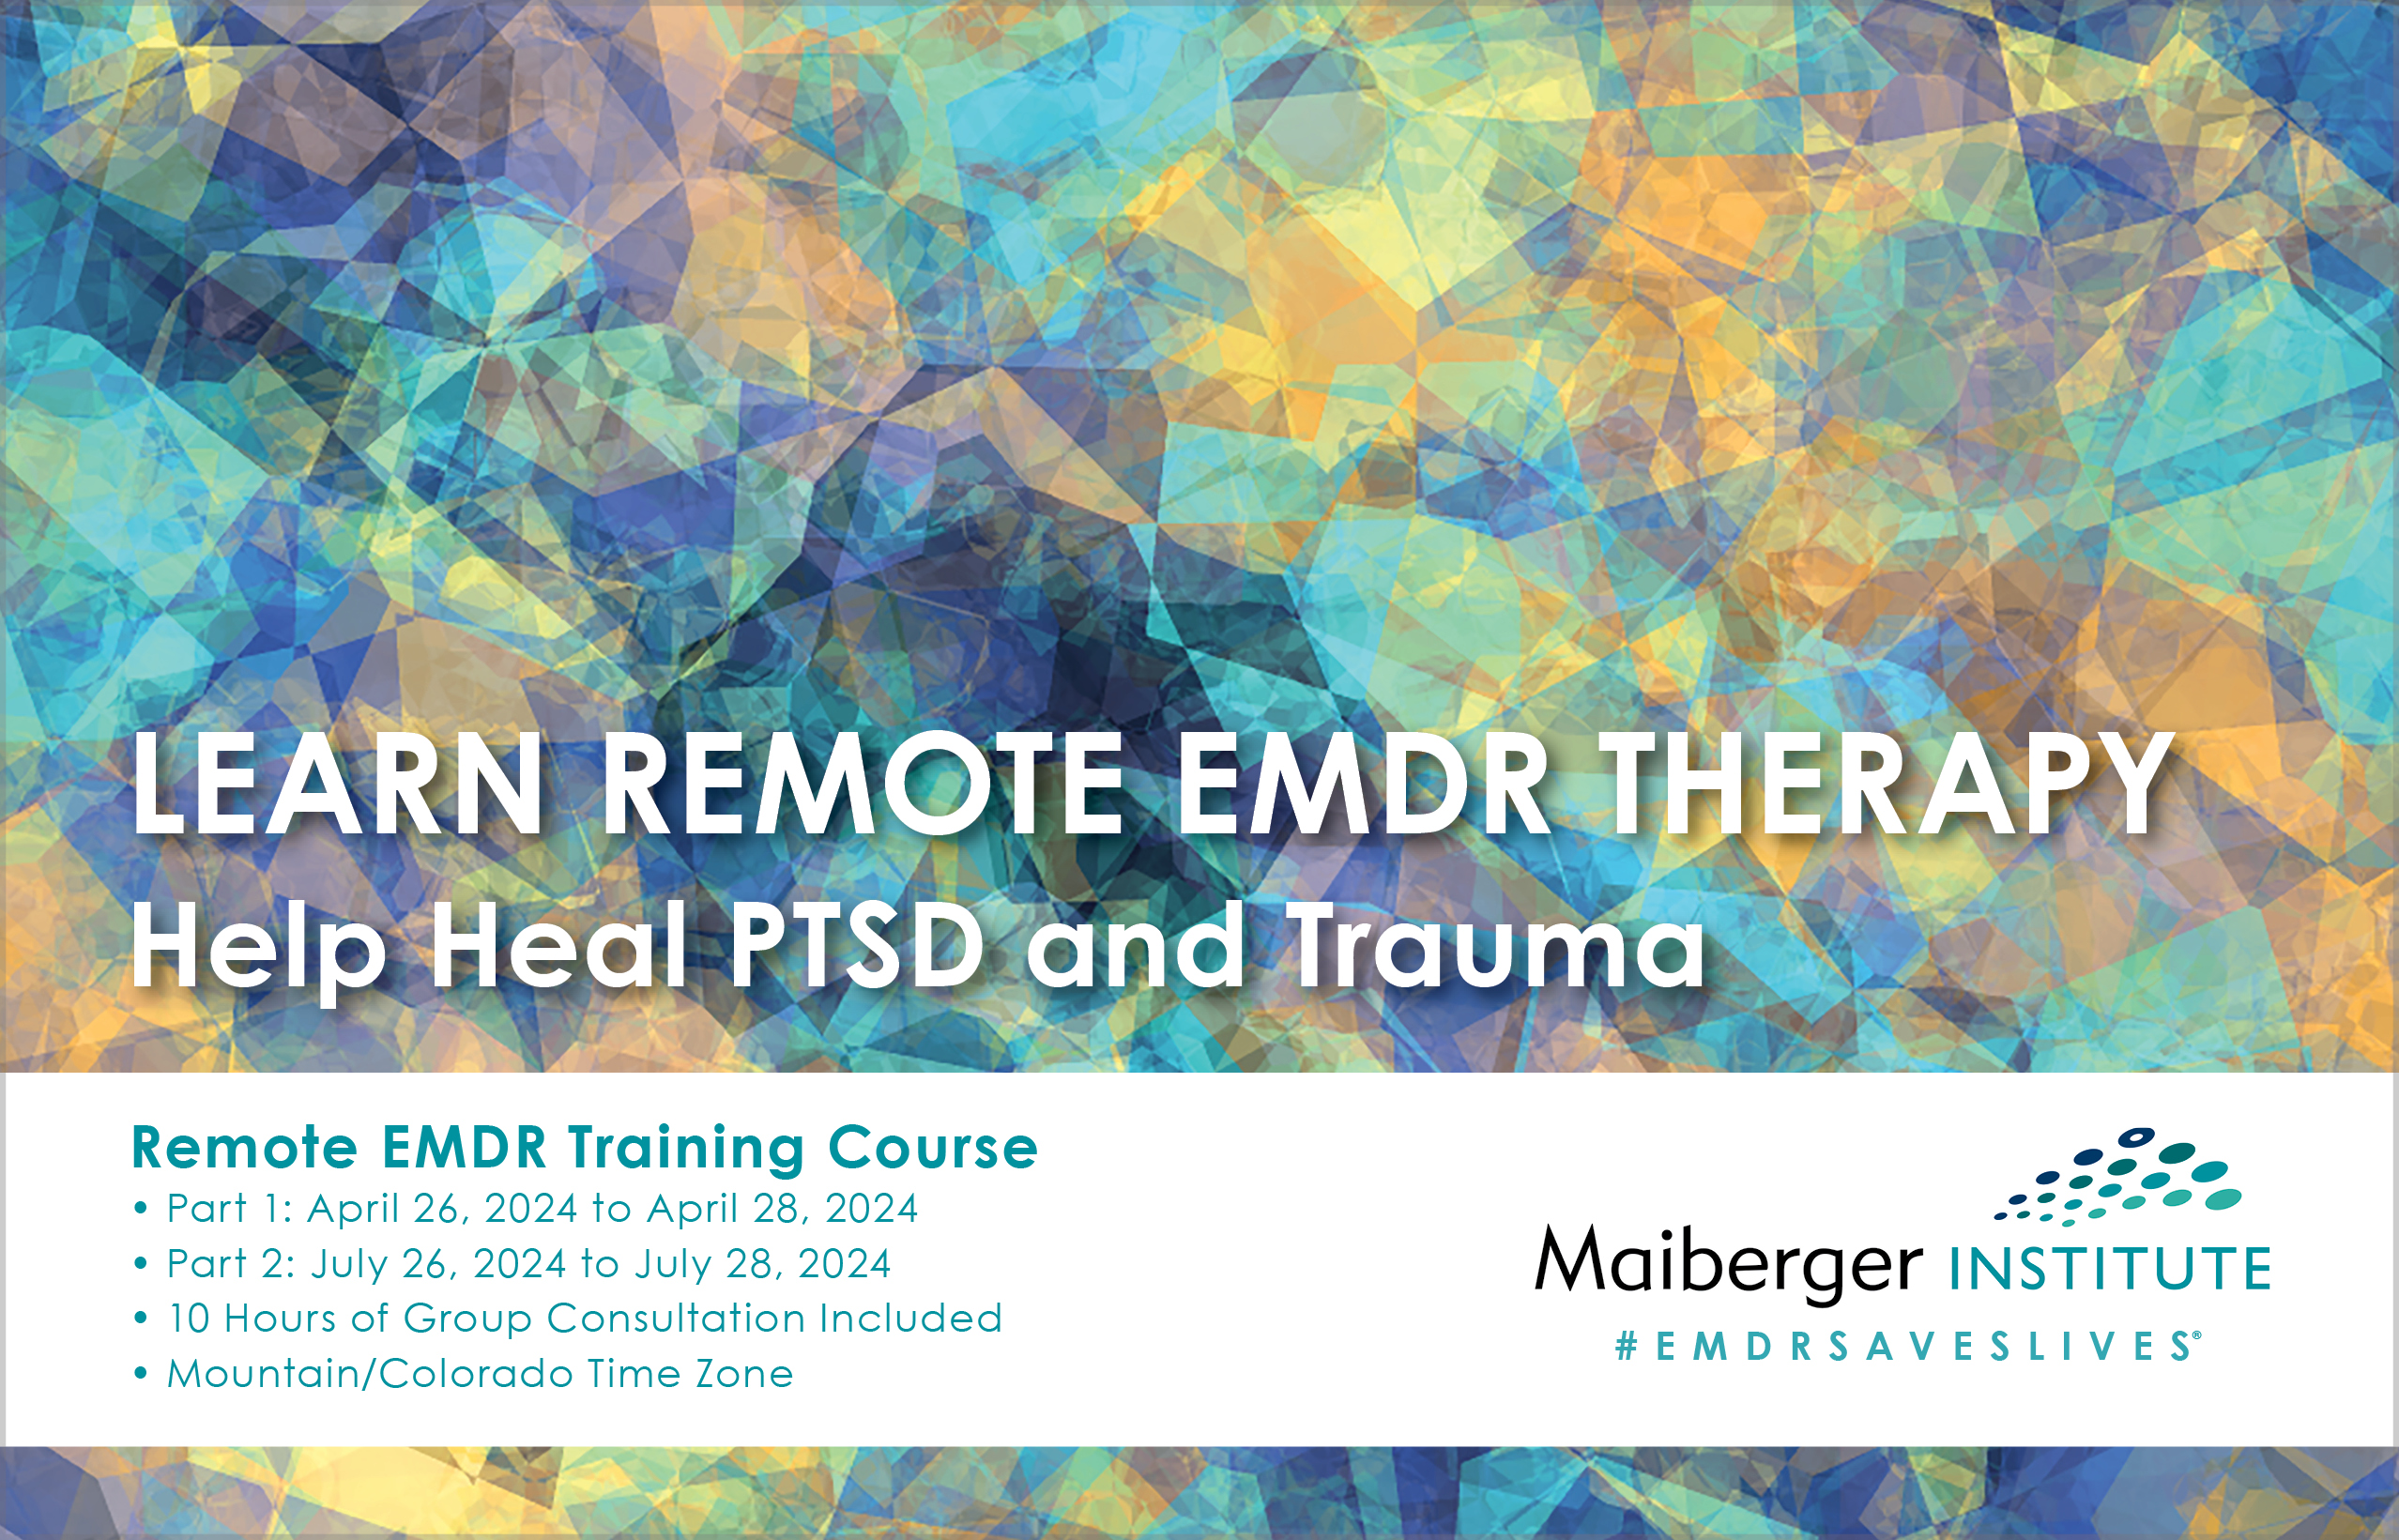 Complete Remote EMDR Training Course - April 2024 and July 2024 - Maiberger Institute - EMDR Events Calendar